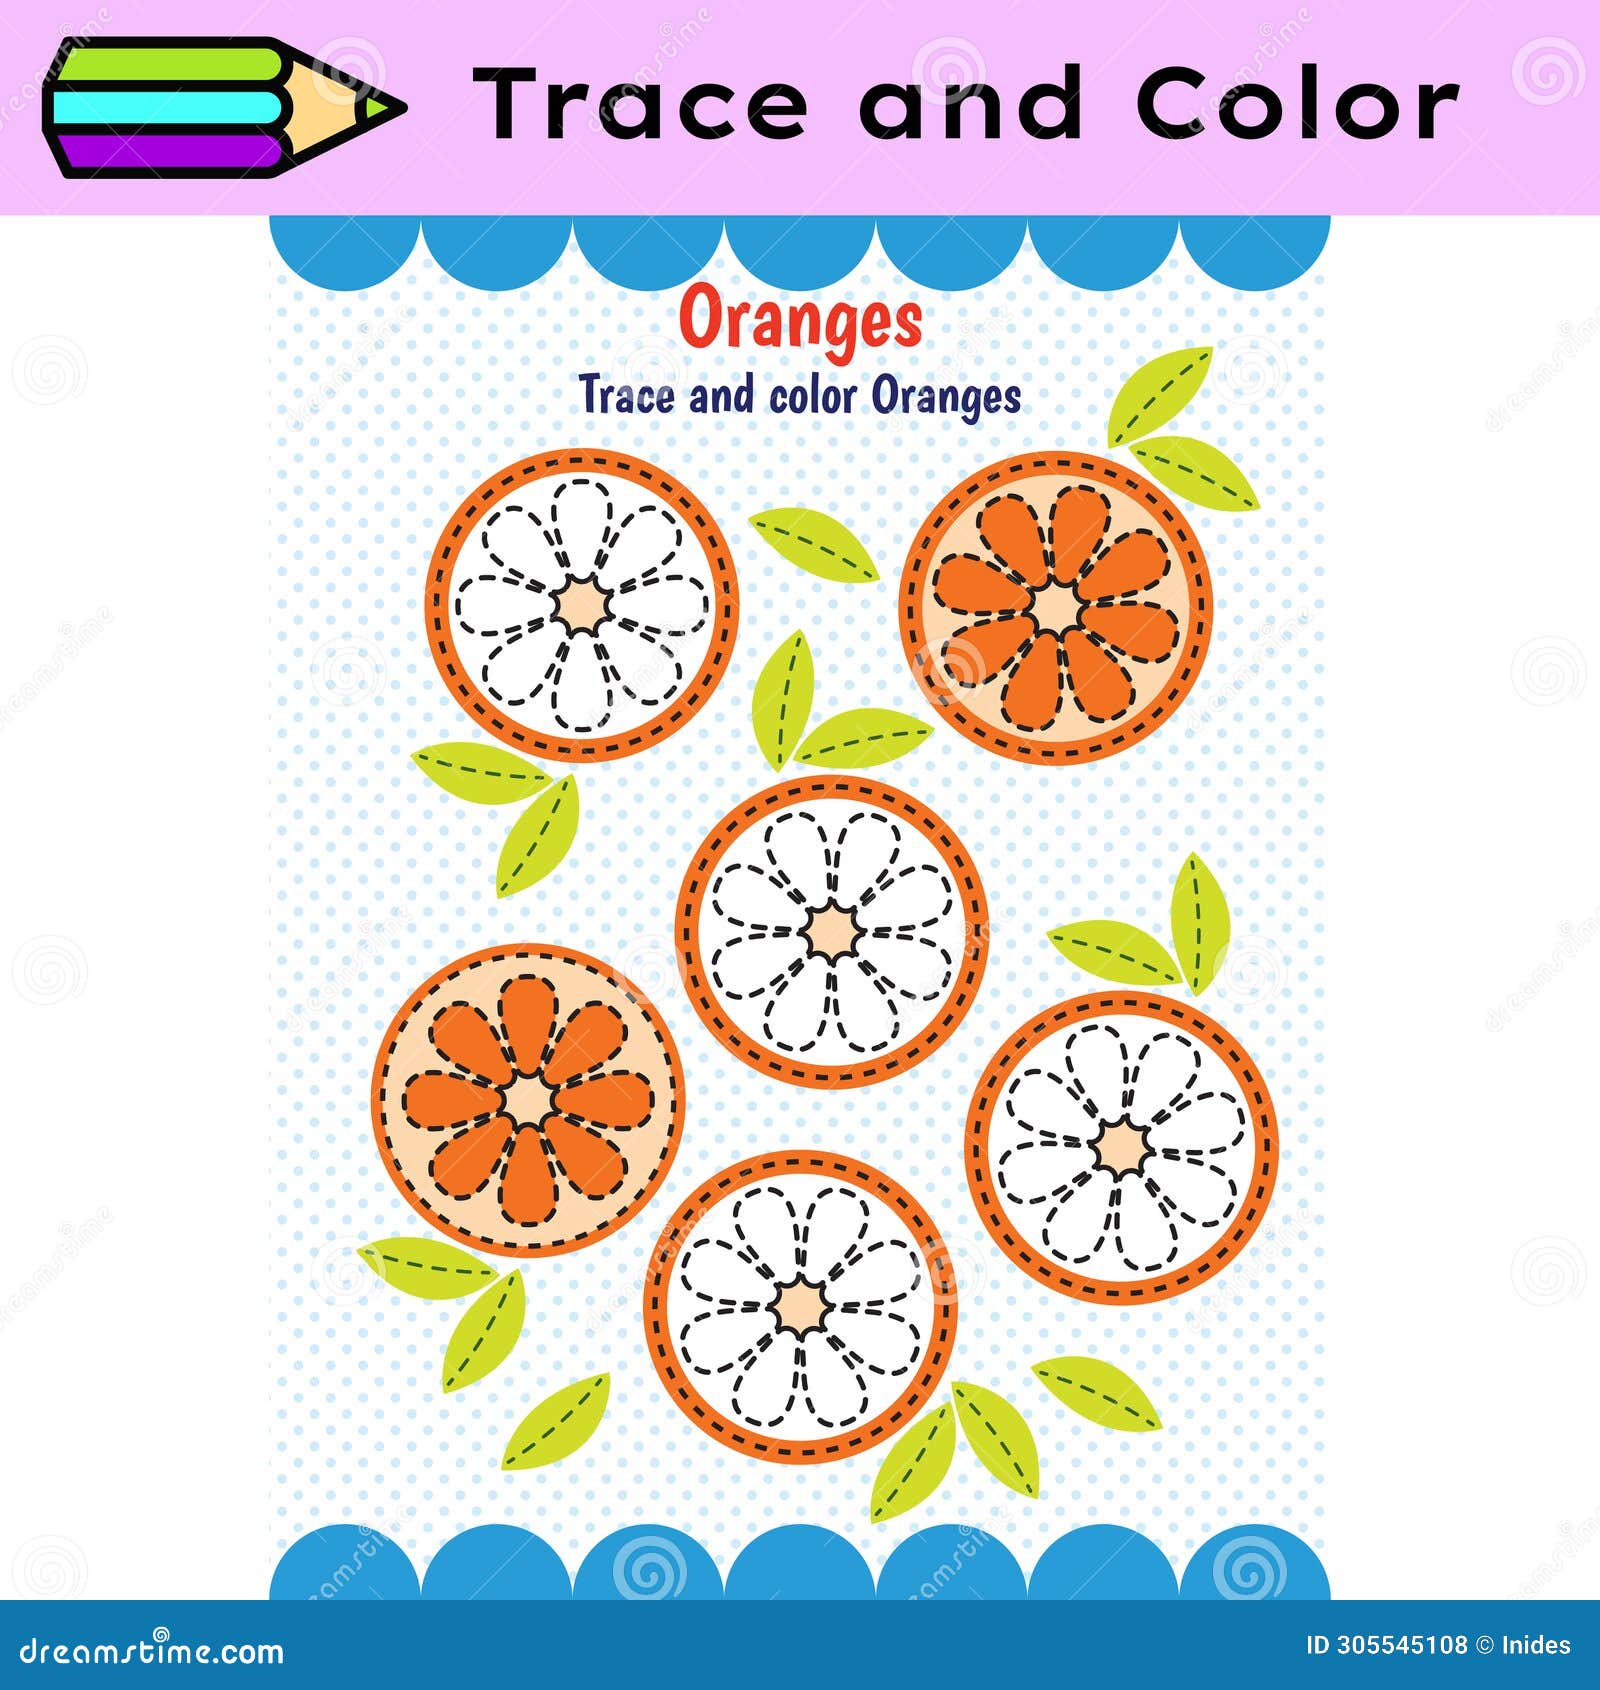 pen tracing lines activity worksheet for children. pencil control for kids practicing motoric skills. oranges